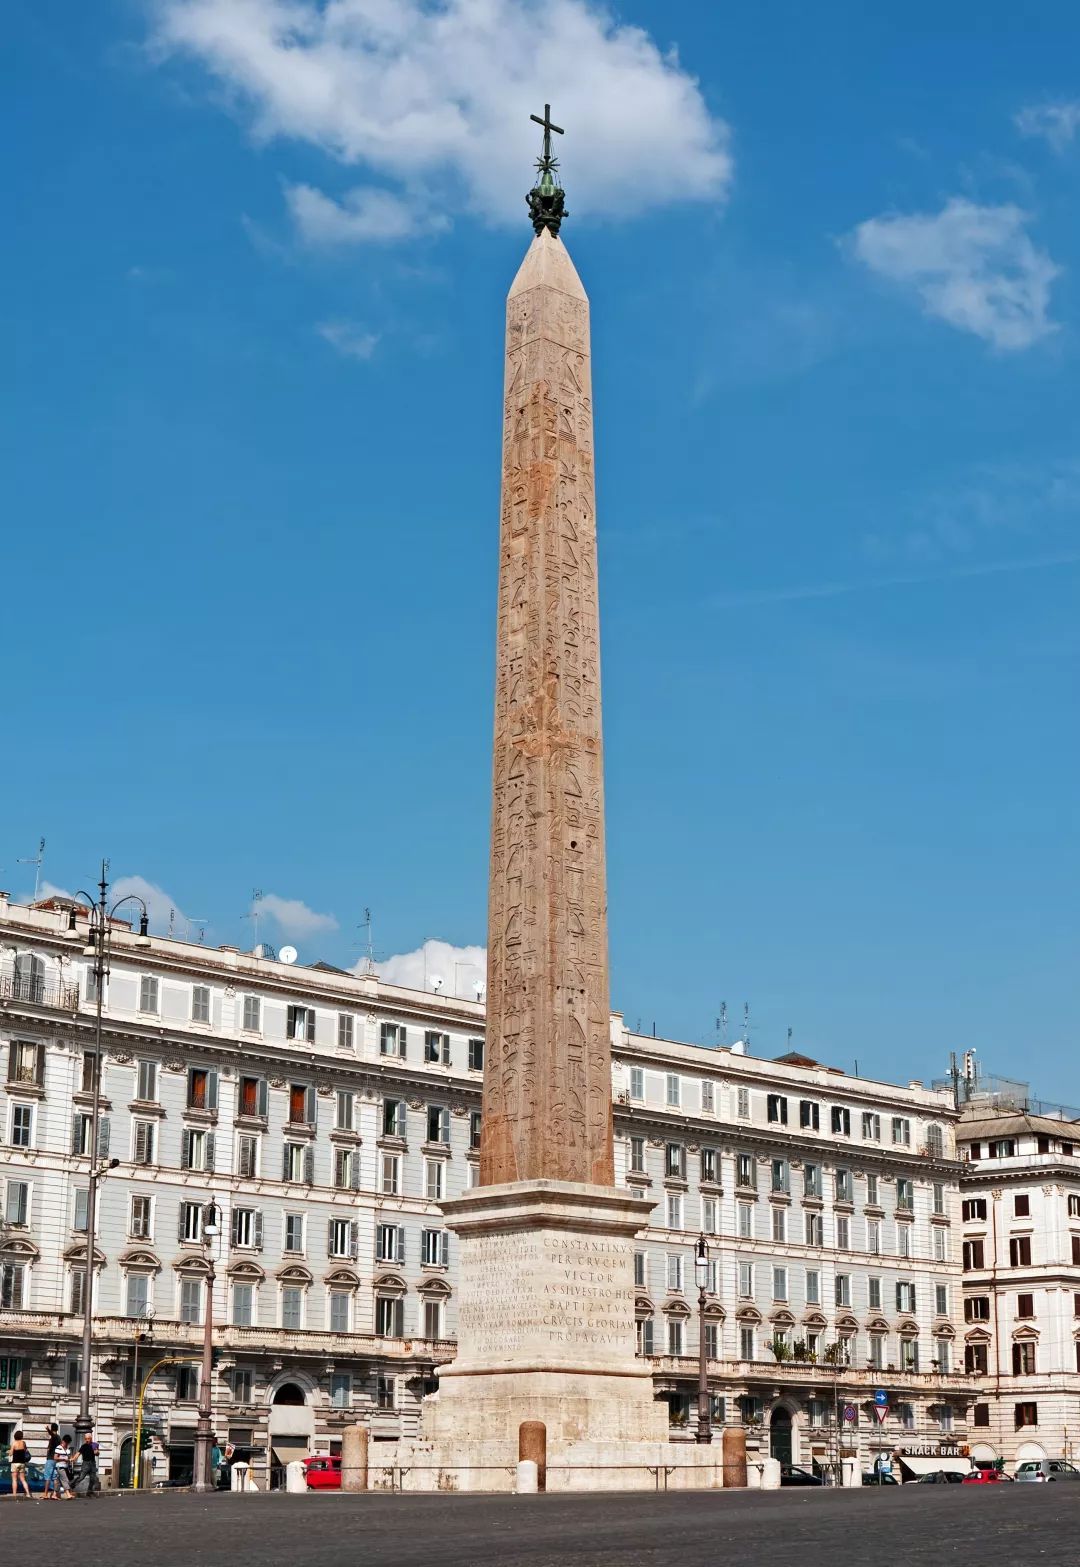 lateran方尖碑高32米,是现存最高的古埃及方尖碑,于4世纪时被运到罗马